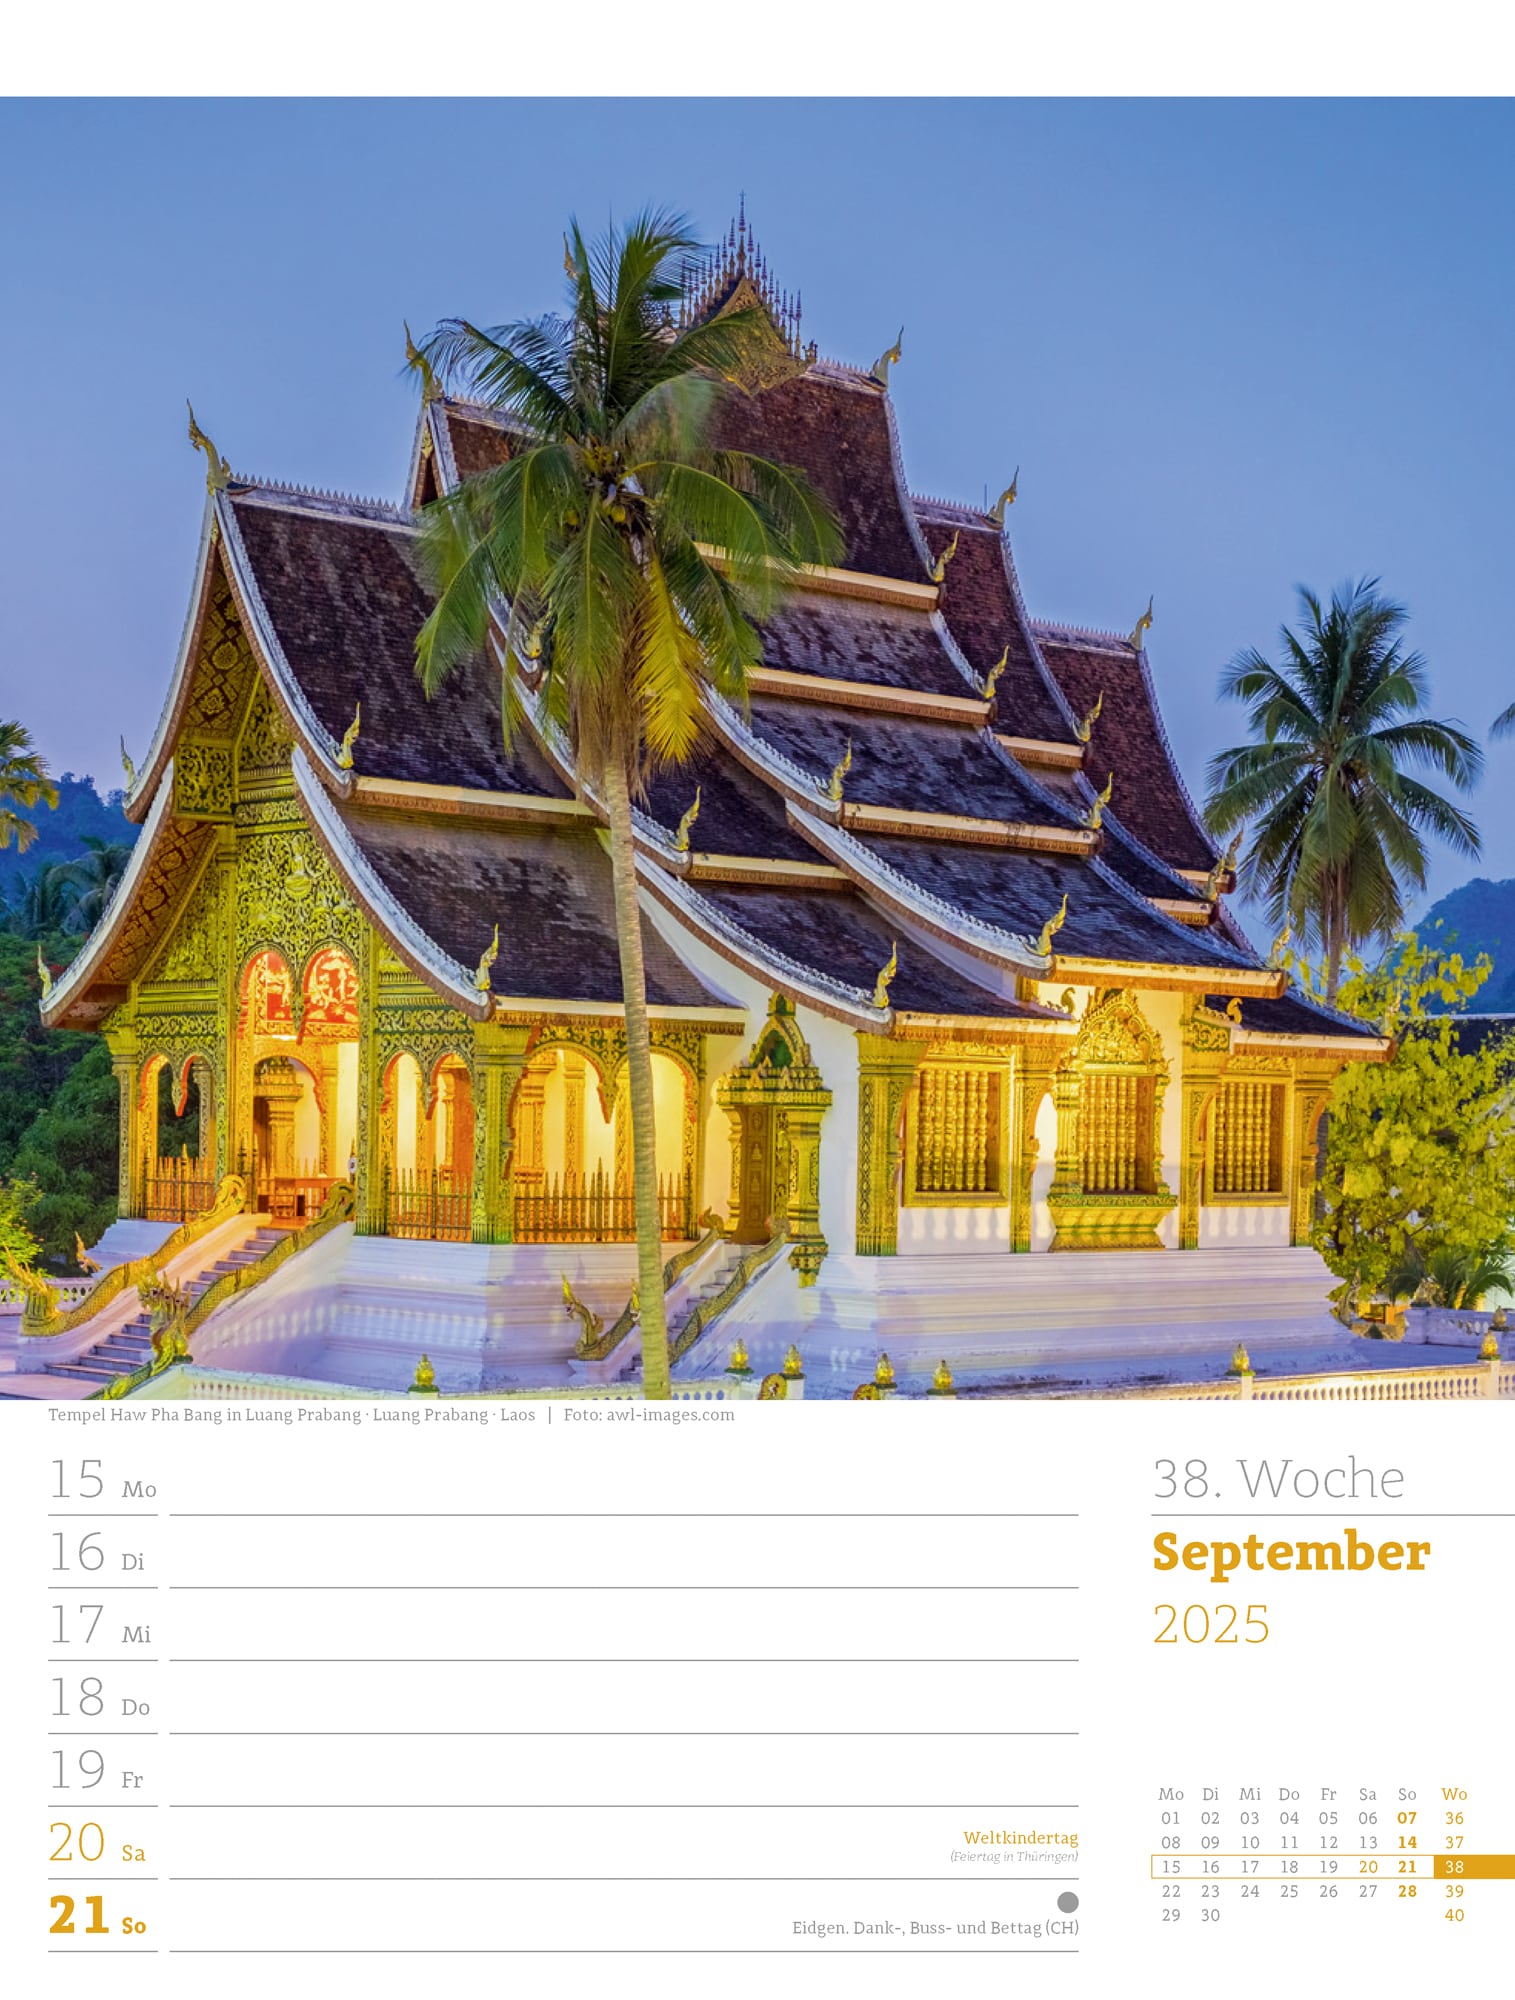 Ackermann Calendar Travel the World 2025 - Weekly Planner - Inside View 41